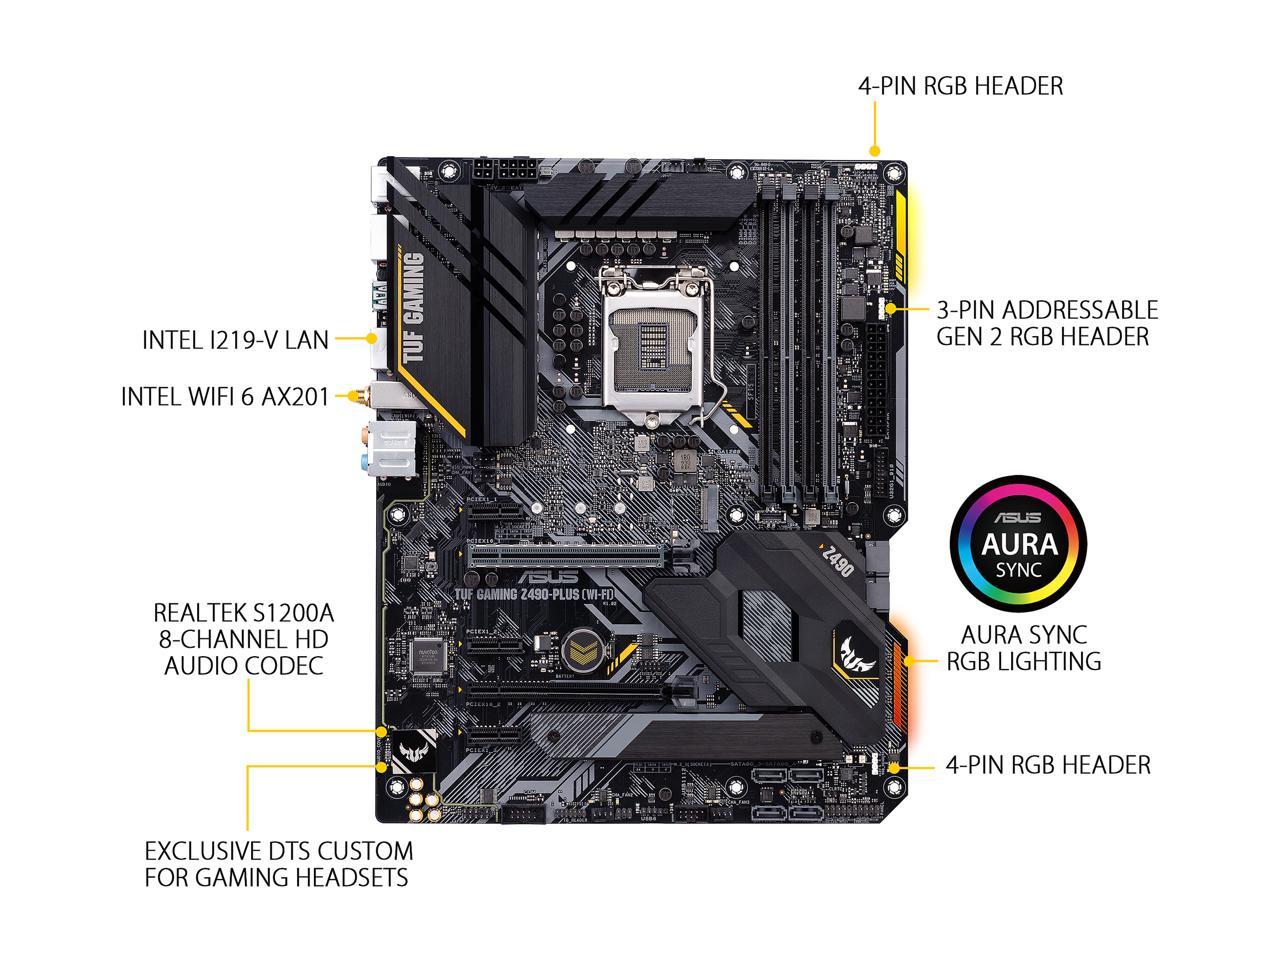 Asus Tuf Gaming Z490-Plus (Wi-Fi) Lga 1200 (Intel 10Th Gen) Intel Z490 (Wifi 6) Sata 6Gb/S Atx Intel